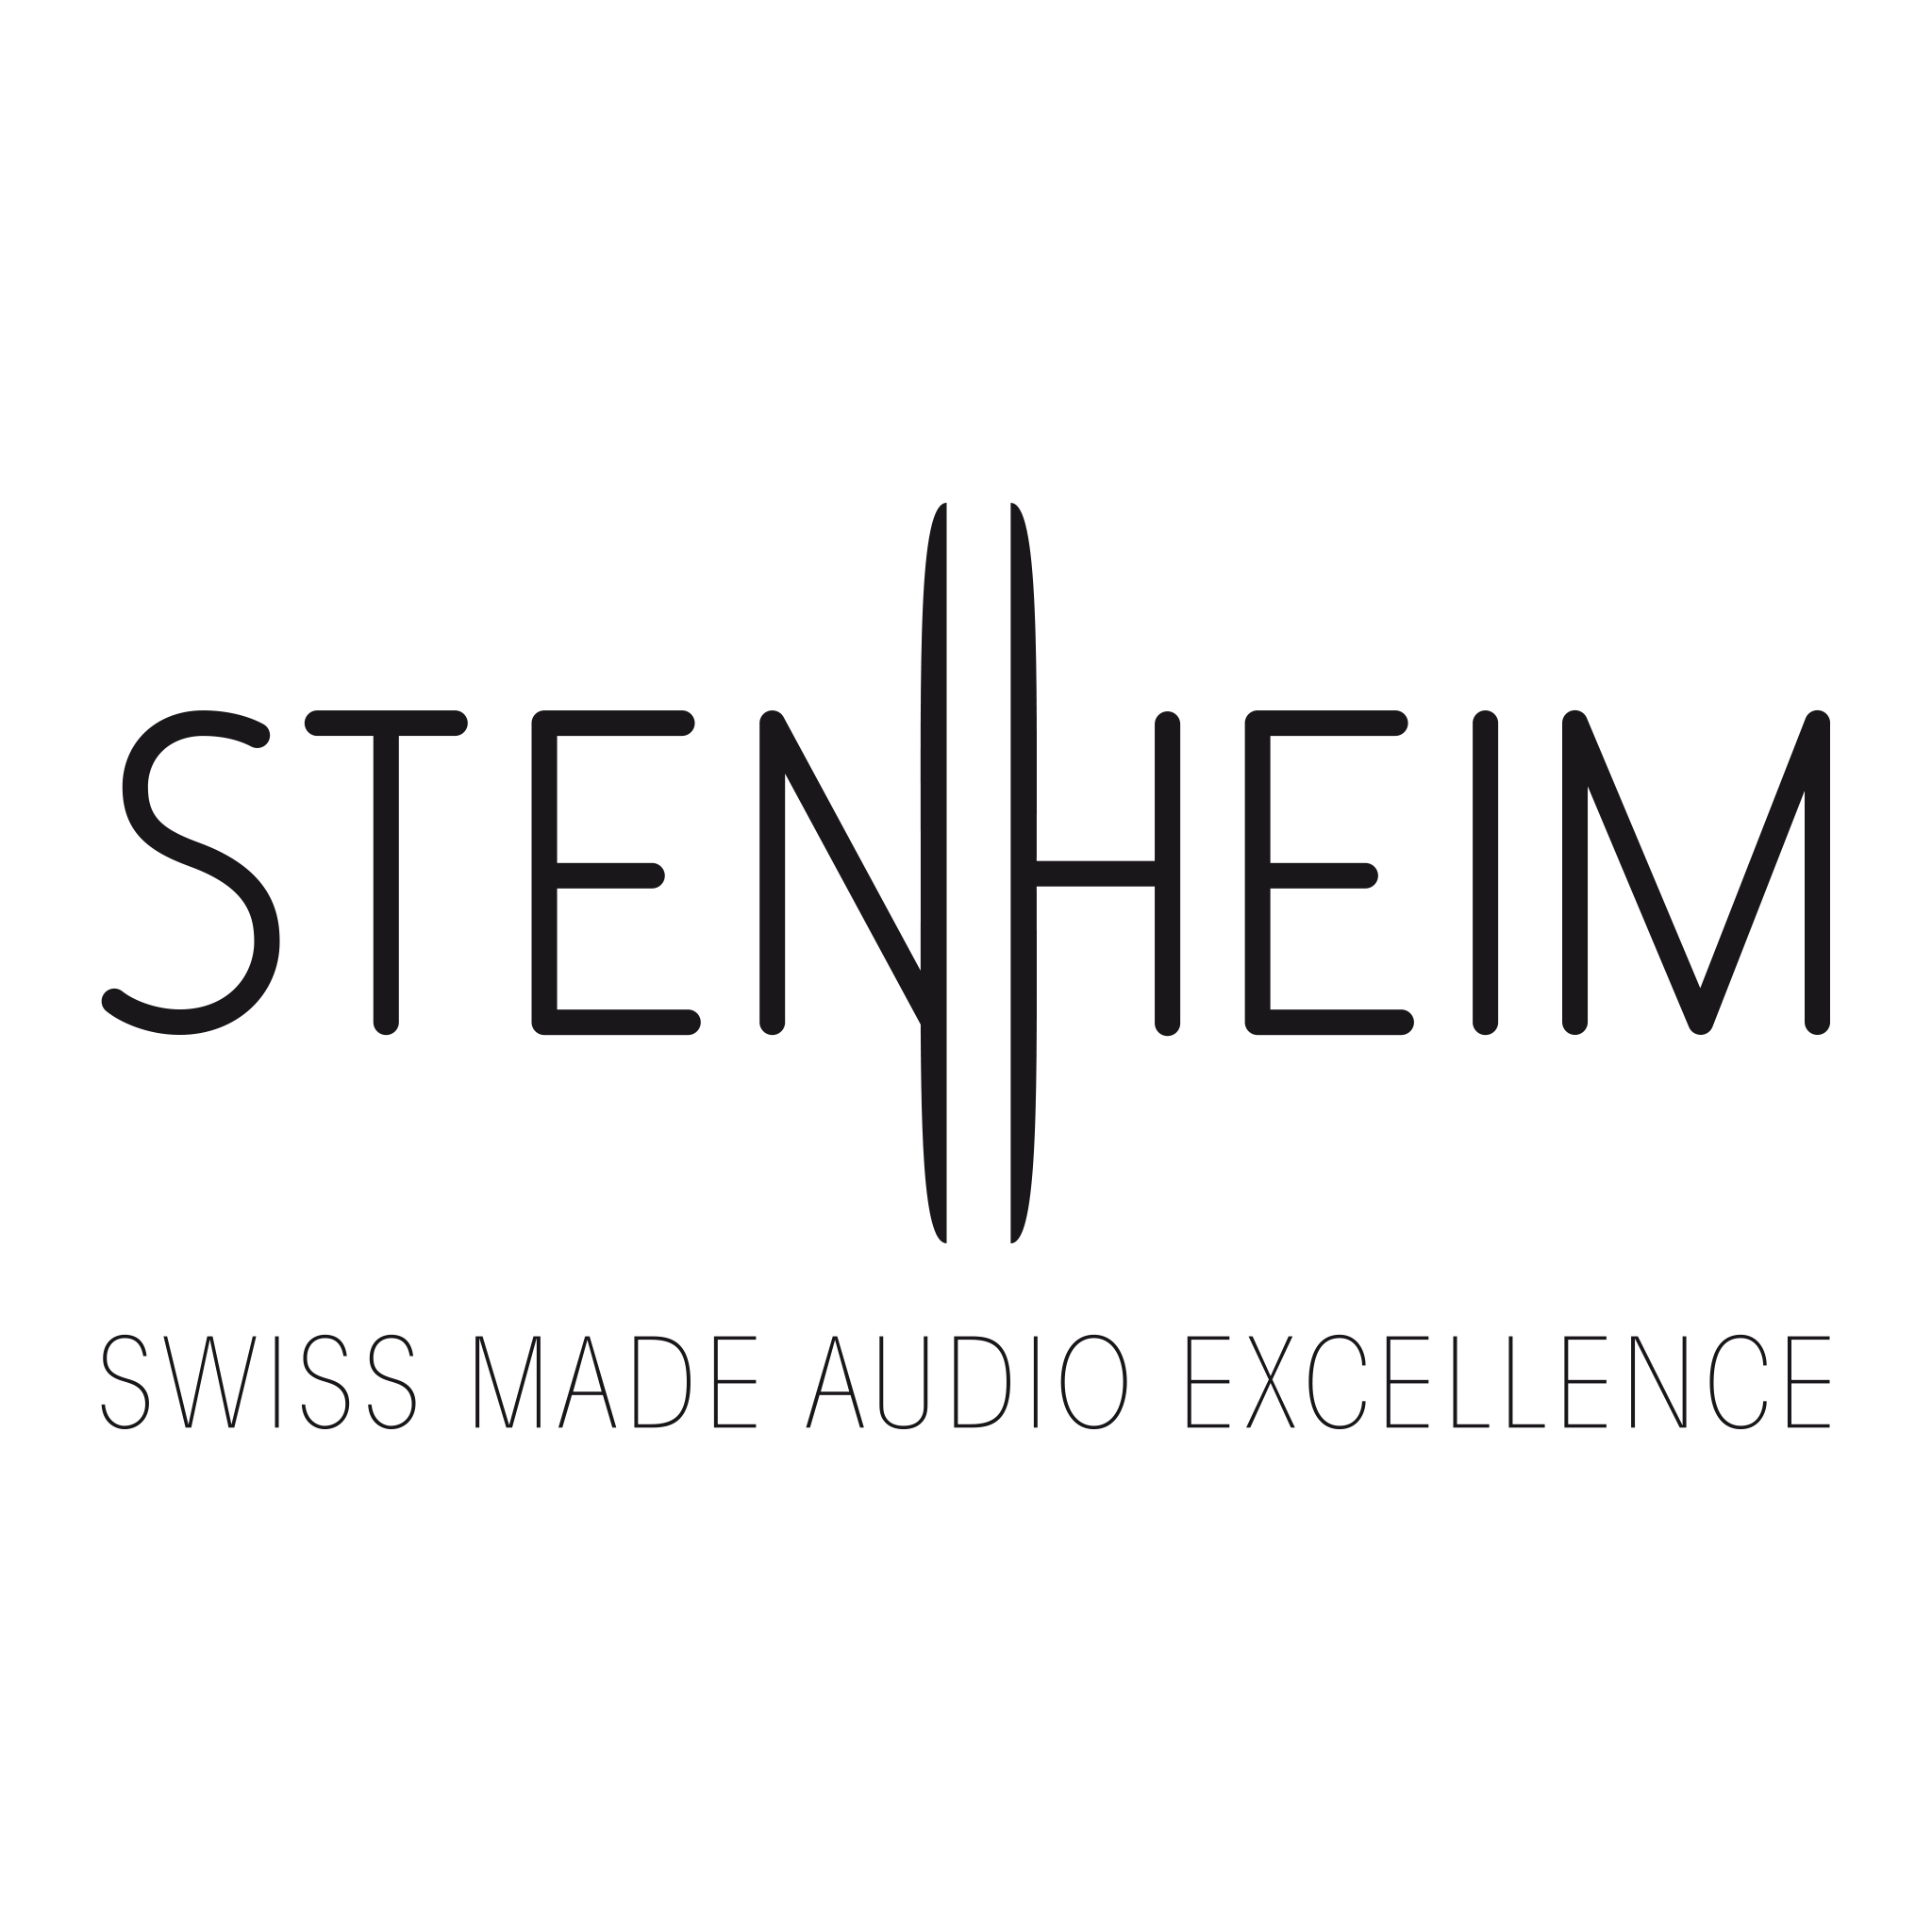 Stenheim logo